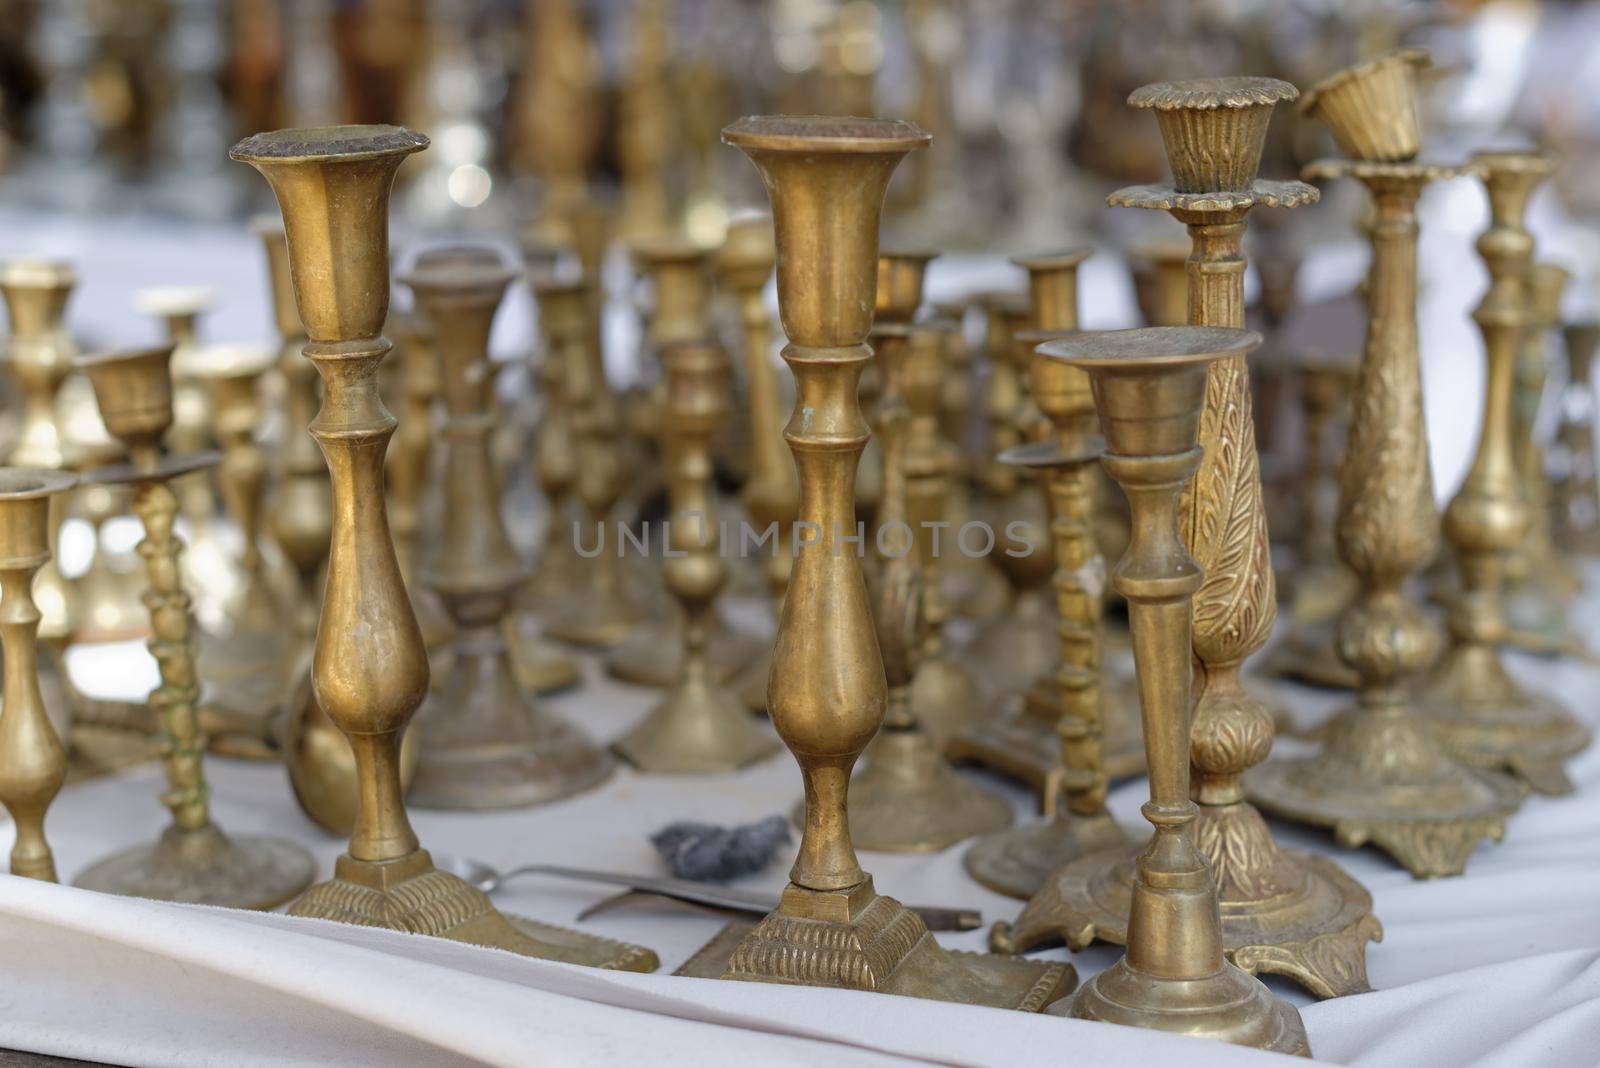 Vintage candlesticks at a flea market by slavapolo